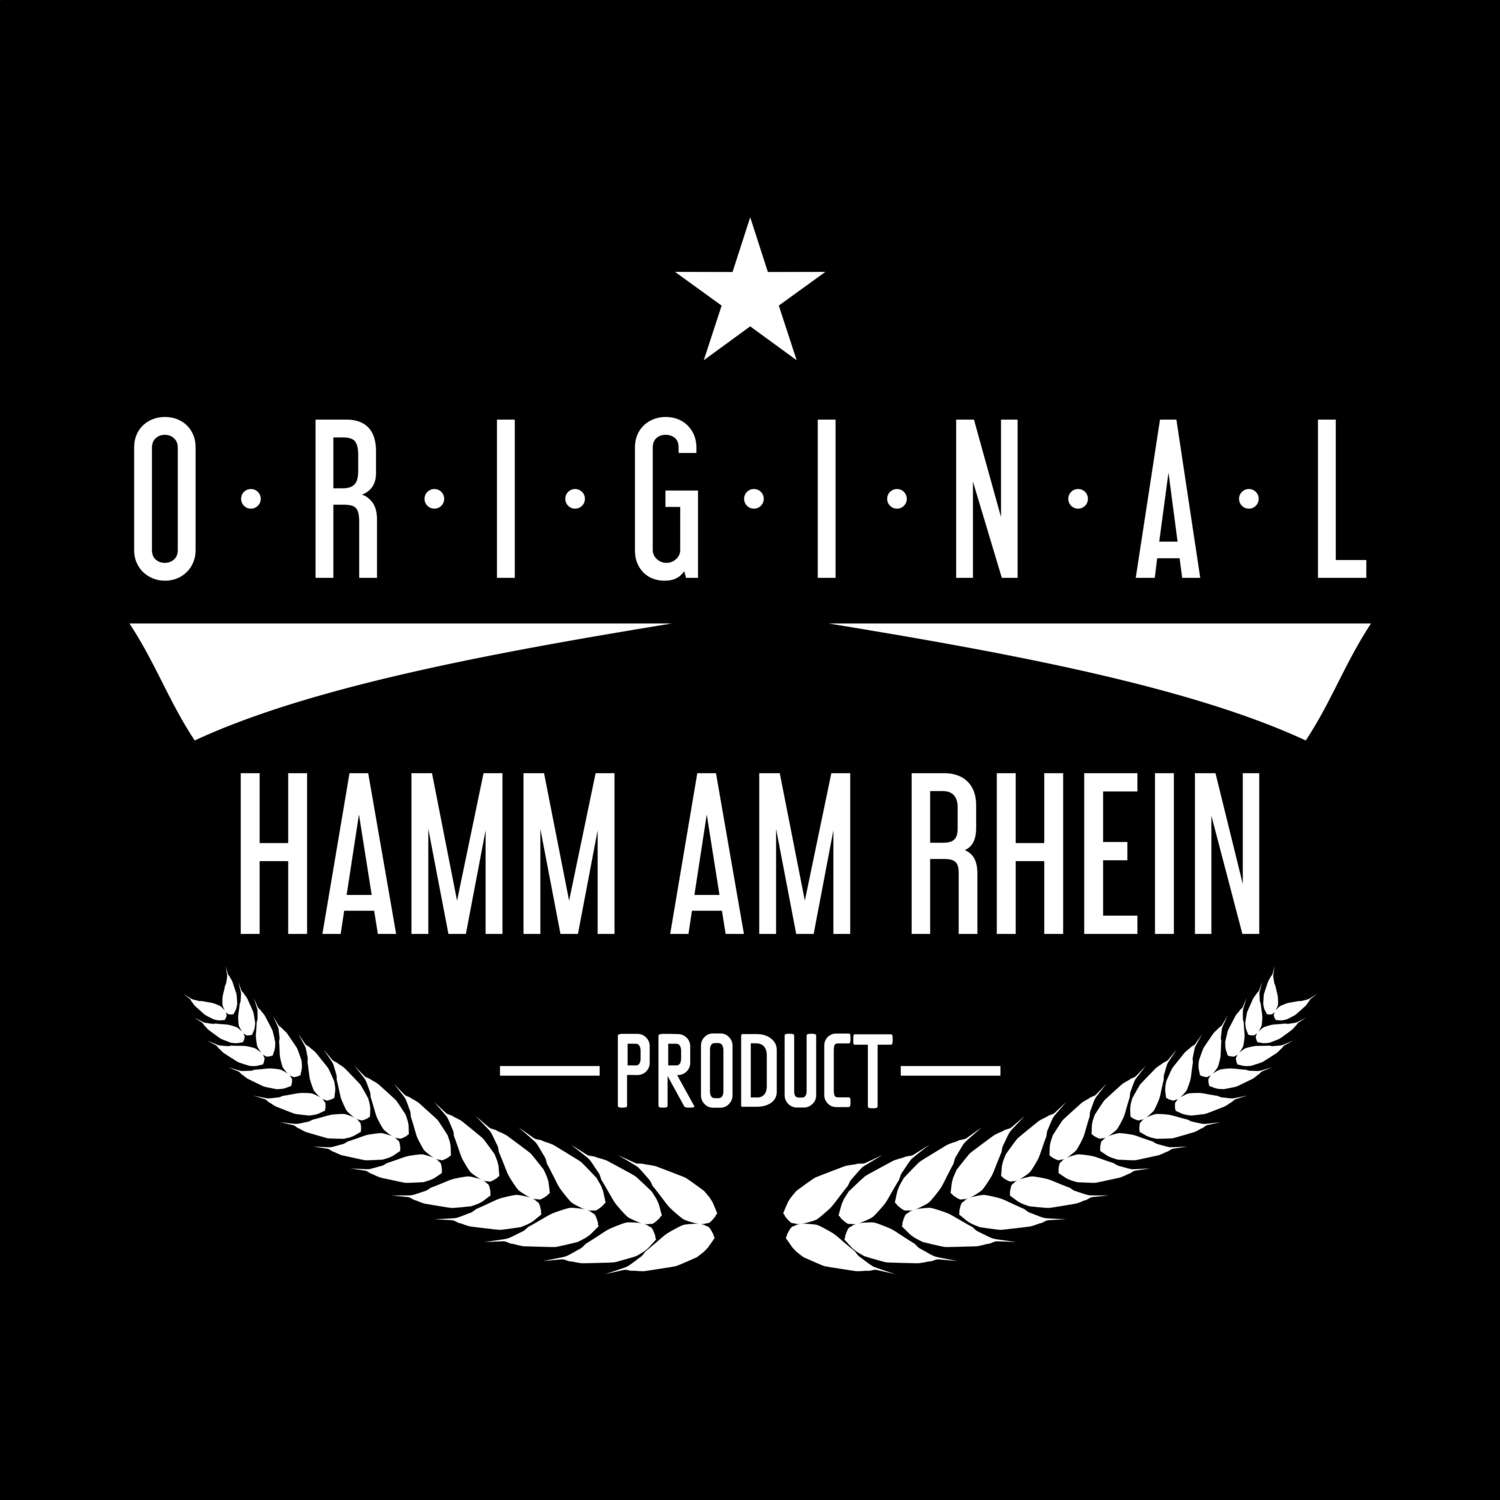 Hamm am Rhein T-Shirt »Original Product«